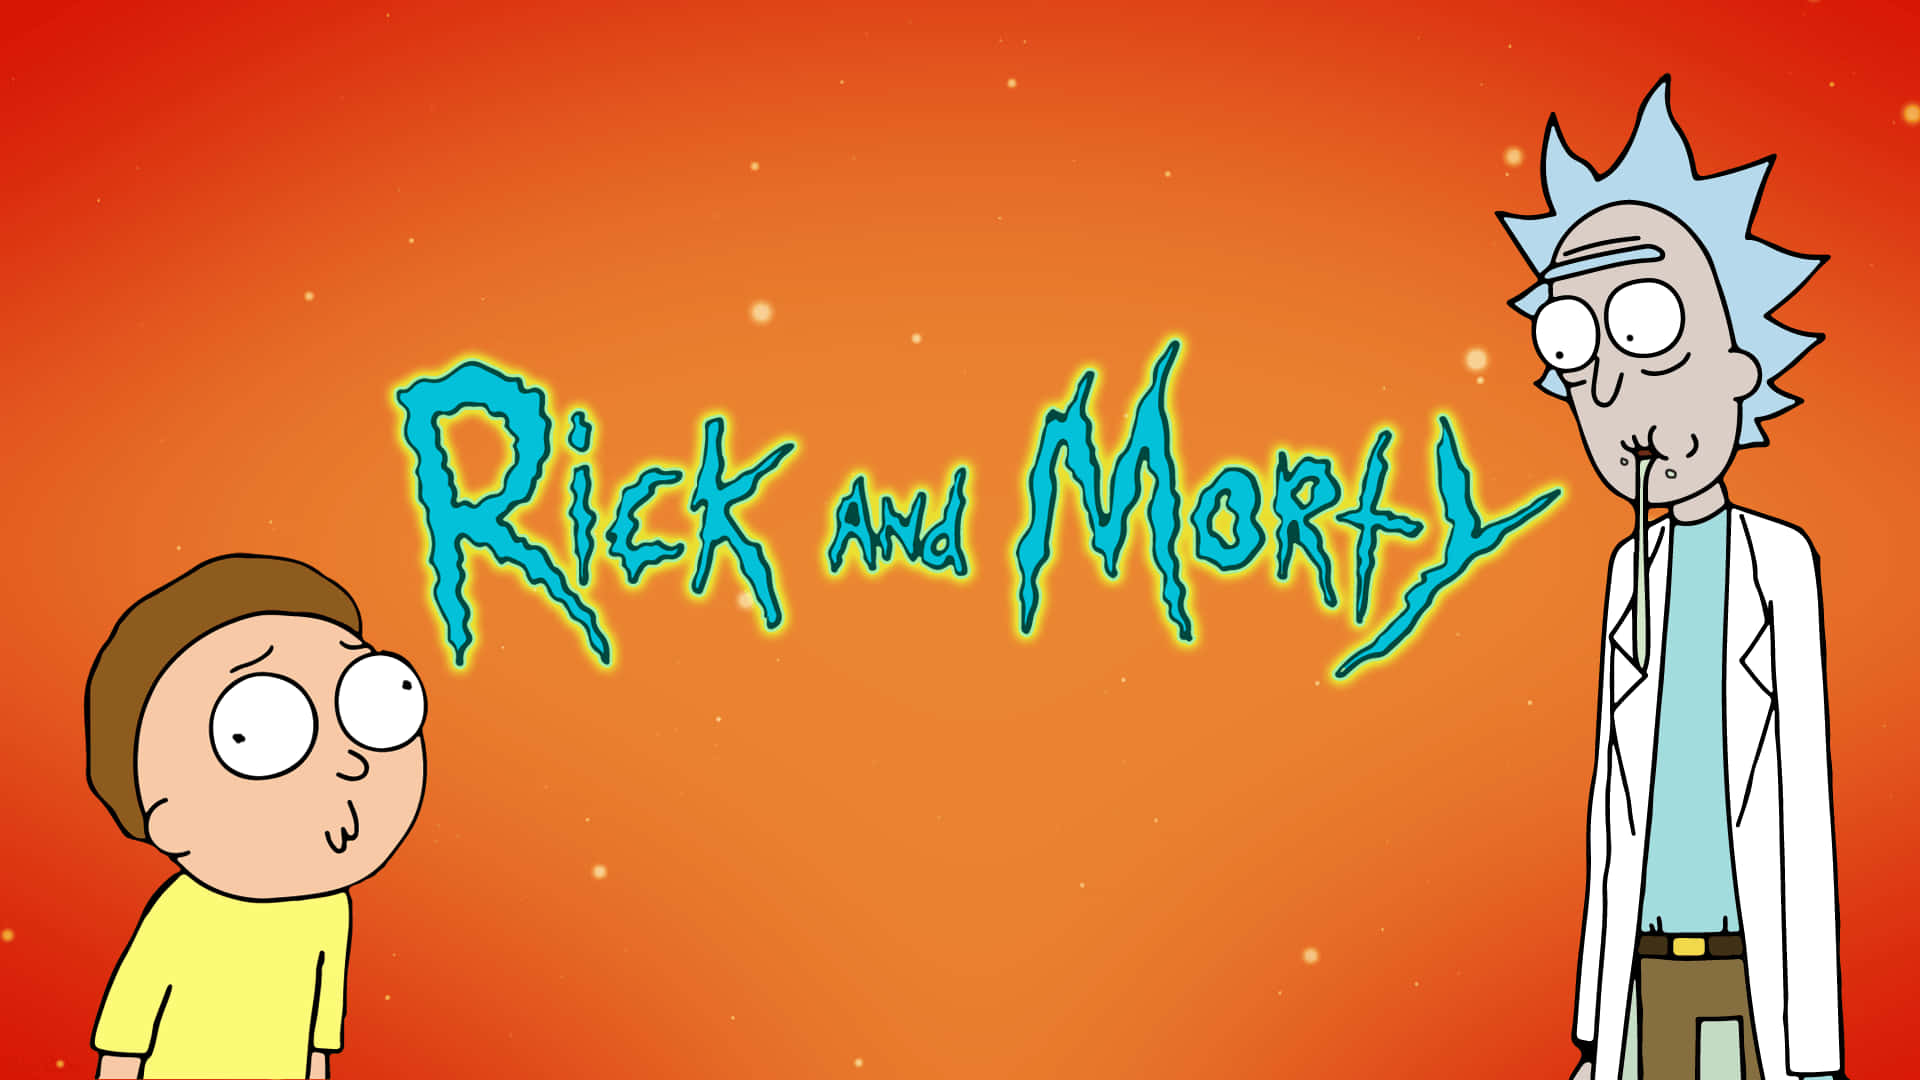 "Rick and Morty Backwoods - A Galactic Adventure Awaits" Wallpaper